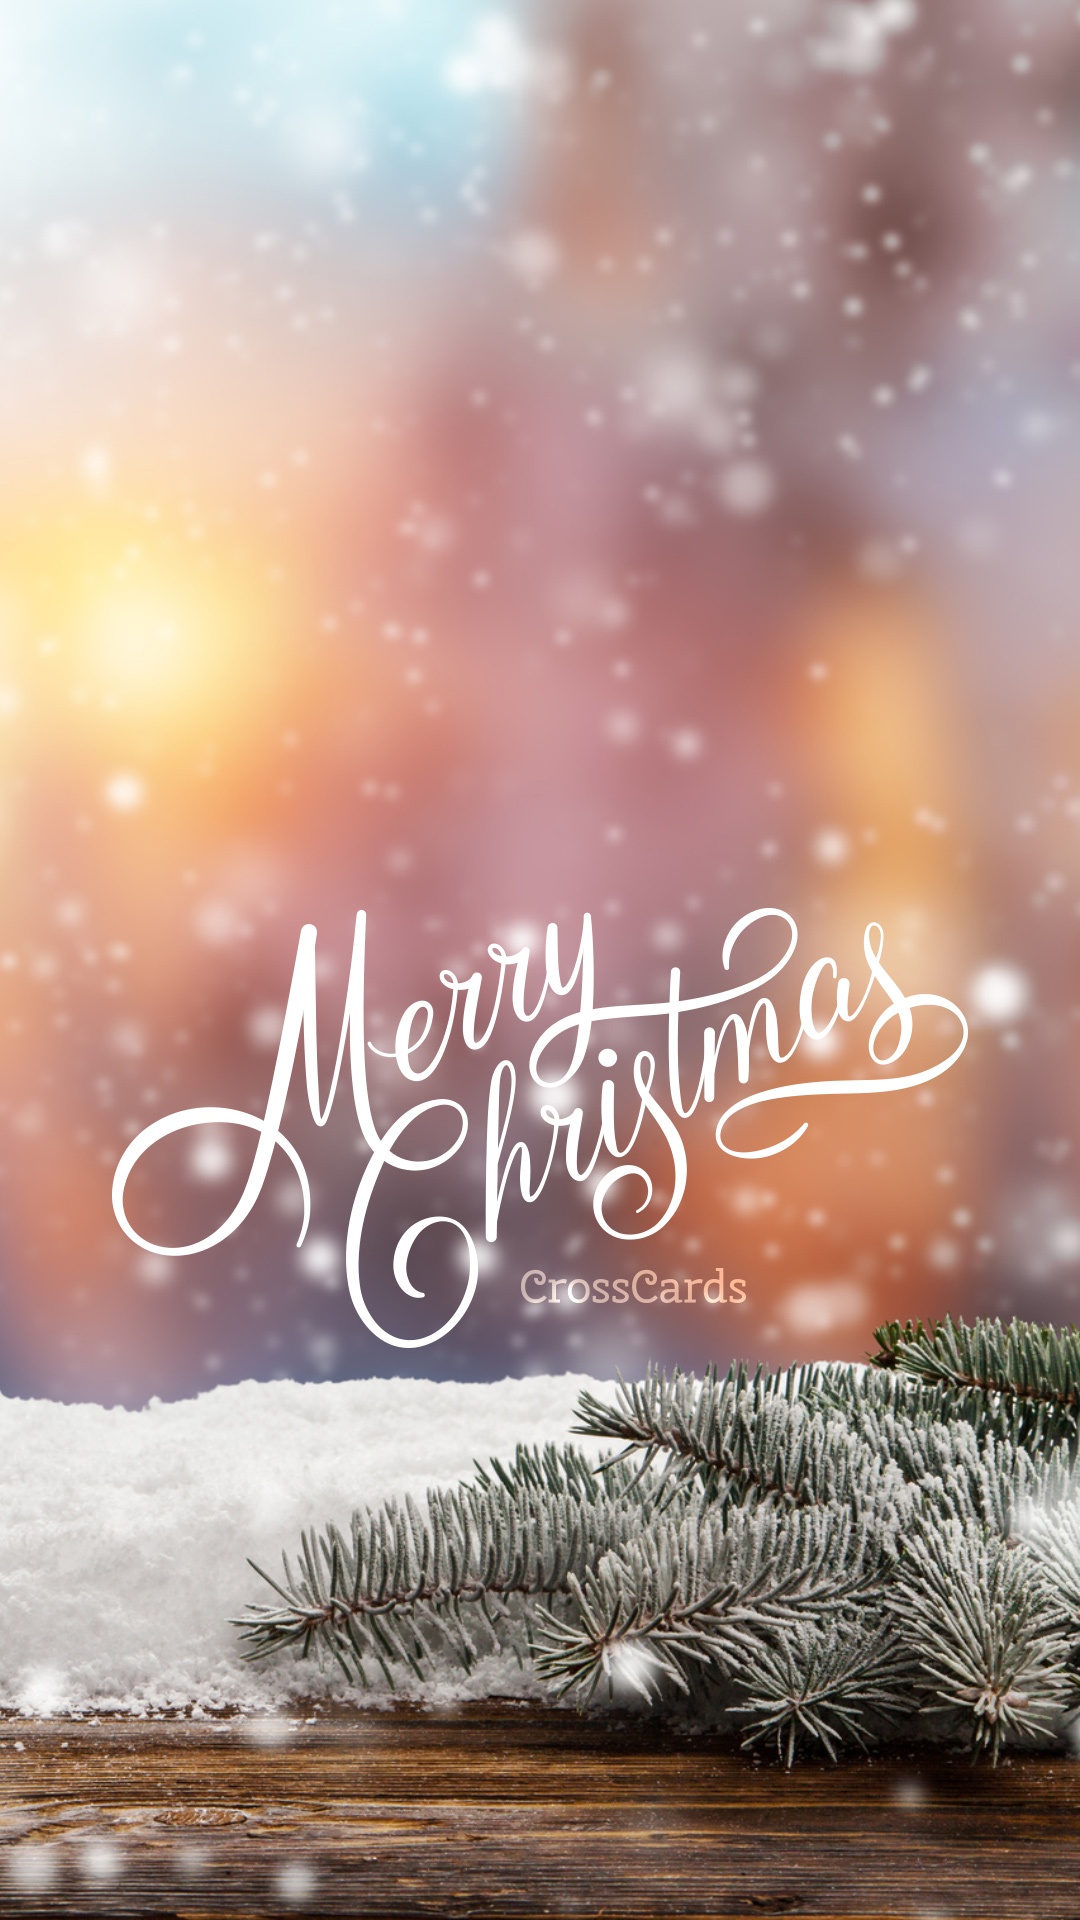 Merry Christmas to You Desktop Wallpaper - Free Mobile Wallpaper Desktop Backgrounds